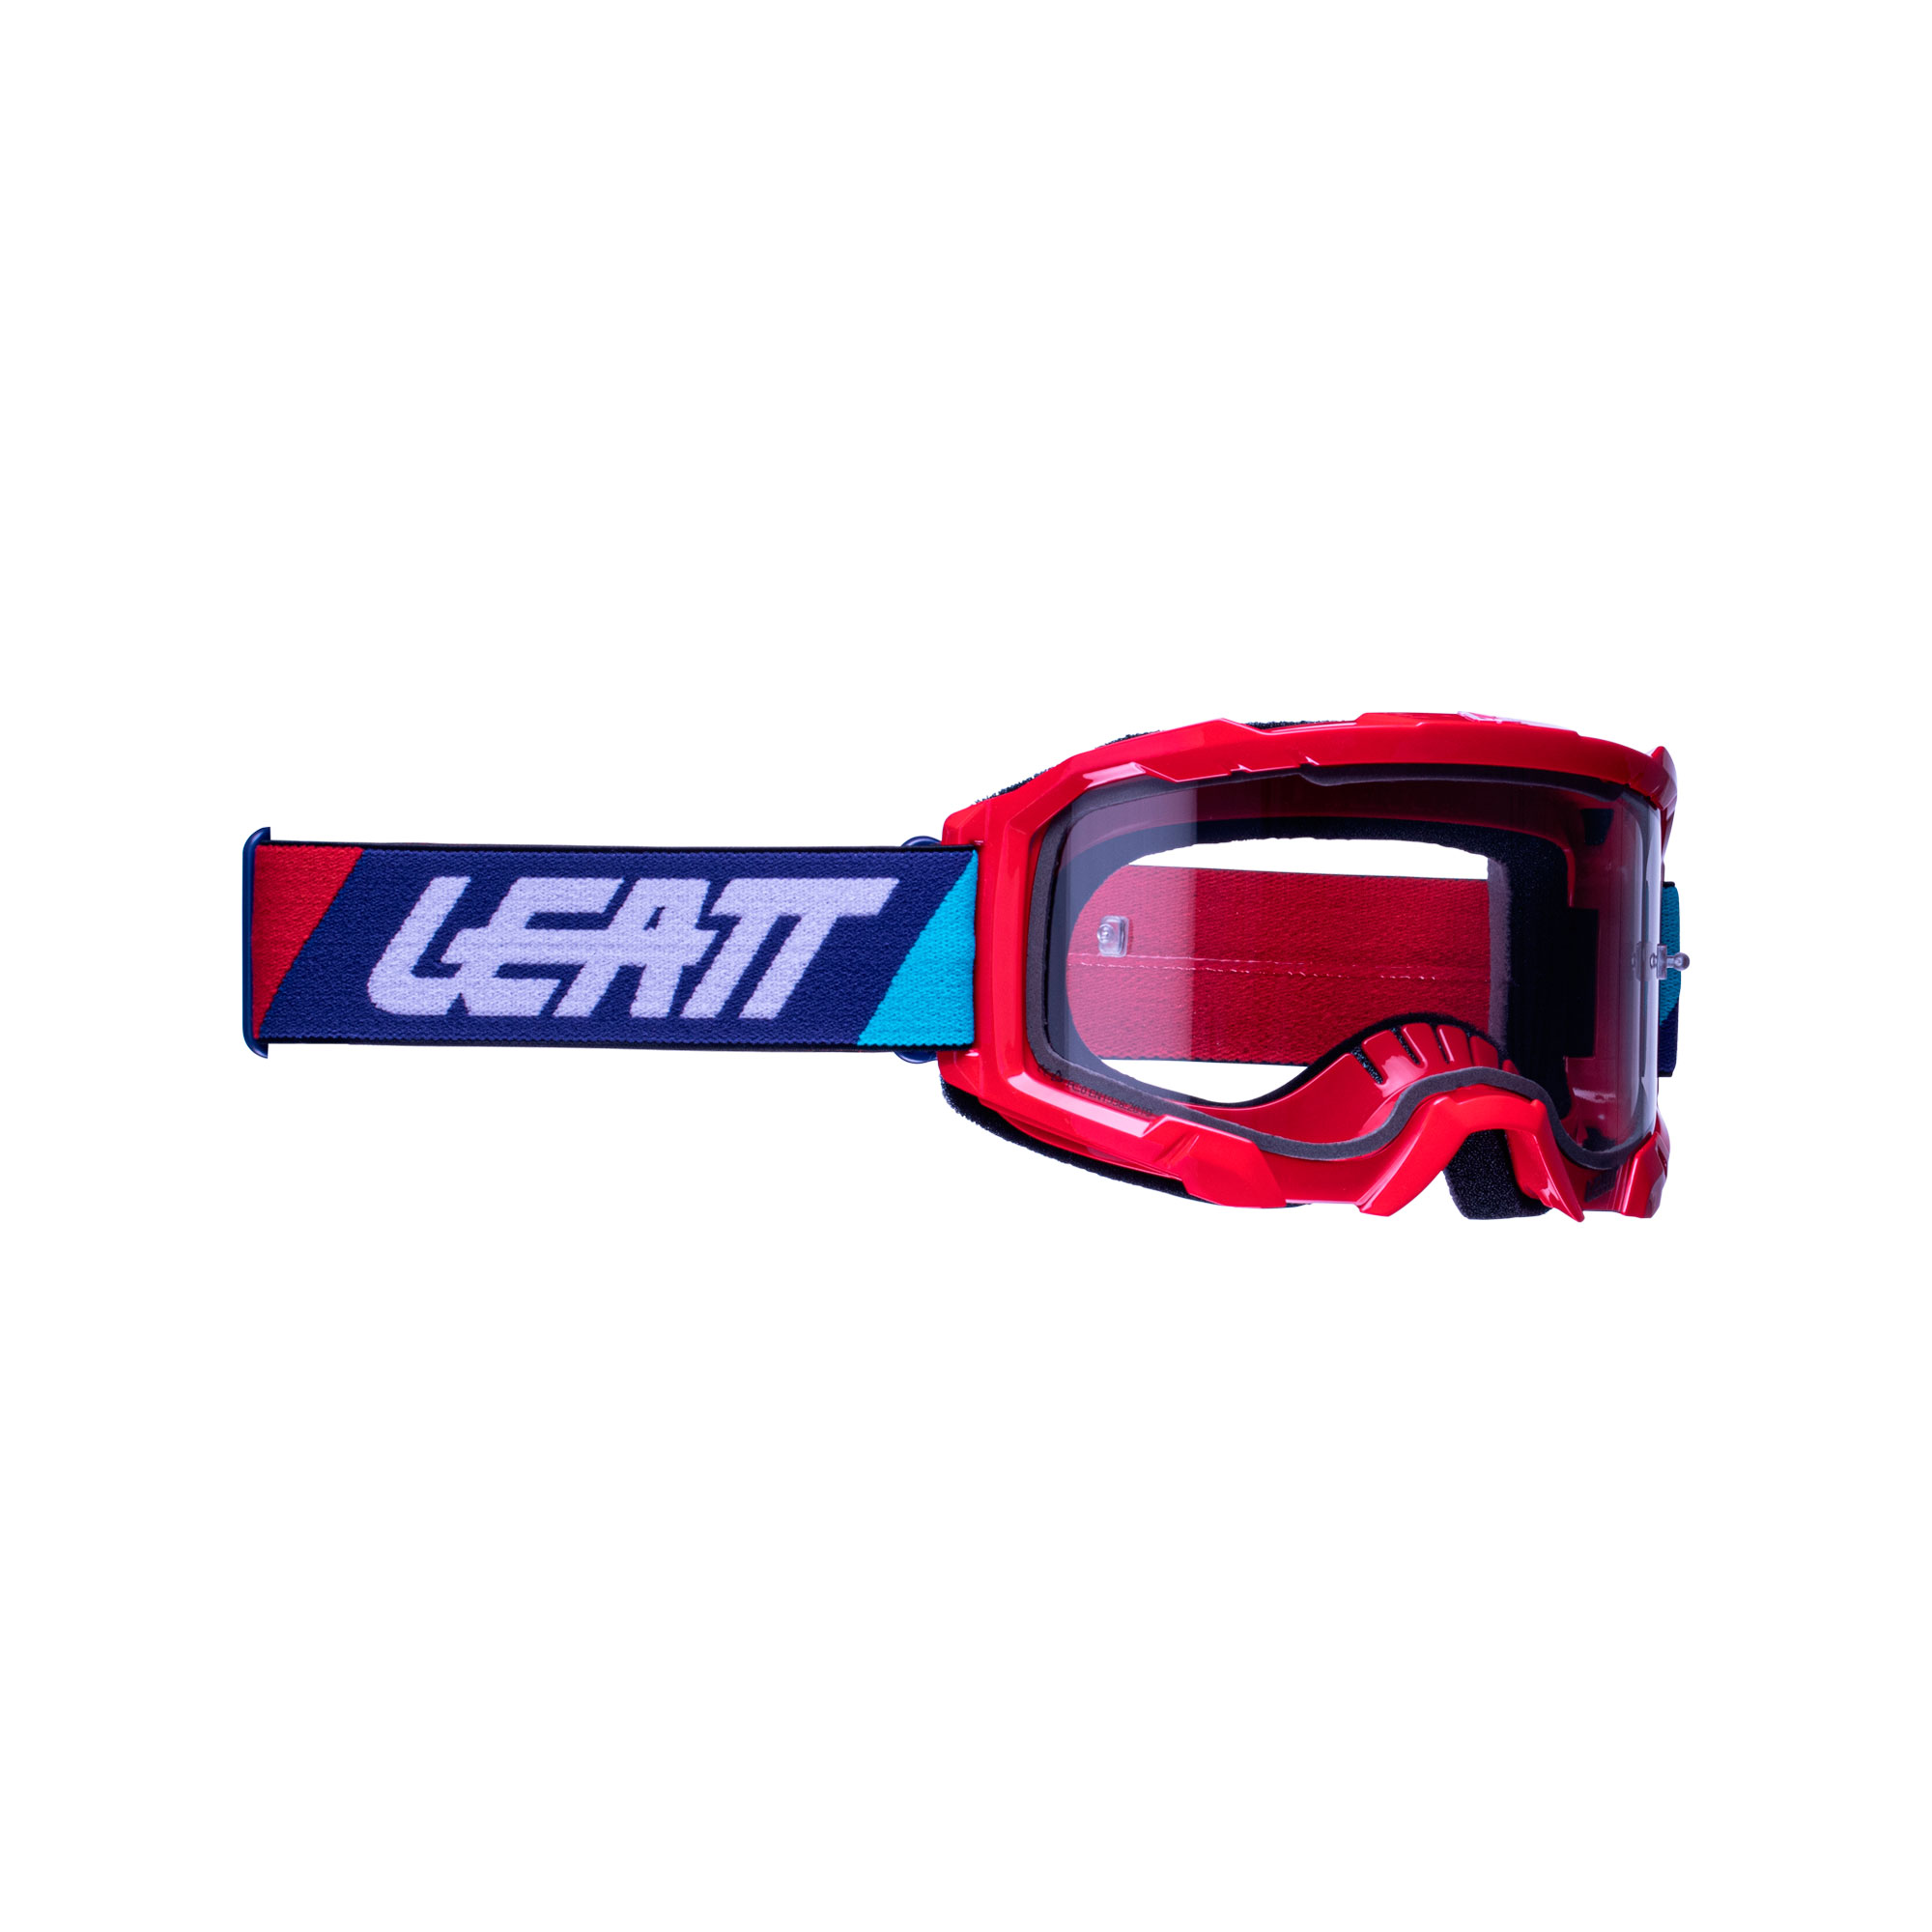 Leatt Antiparra Leatt Velocity 4.5 Red Clear 83%